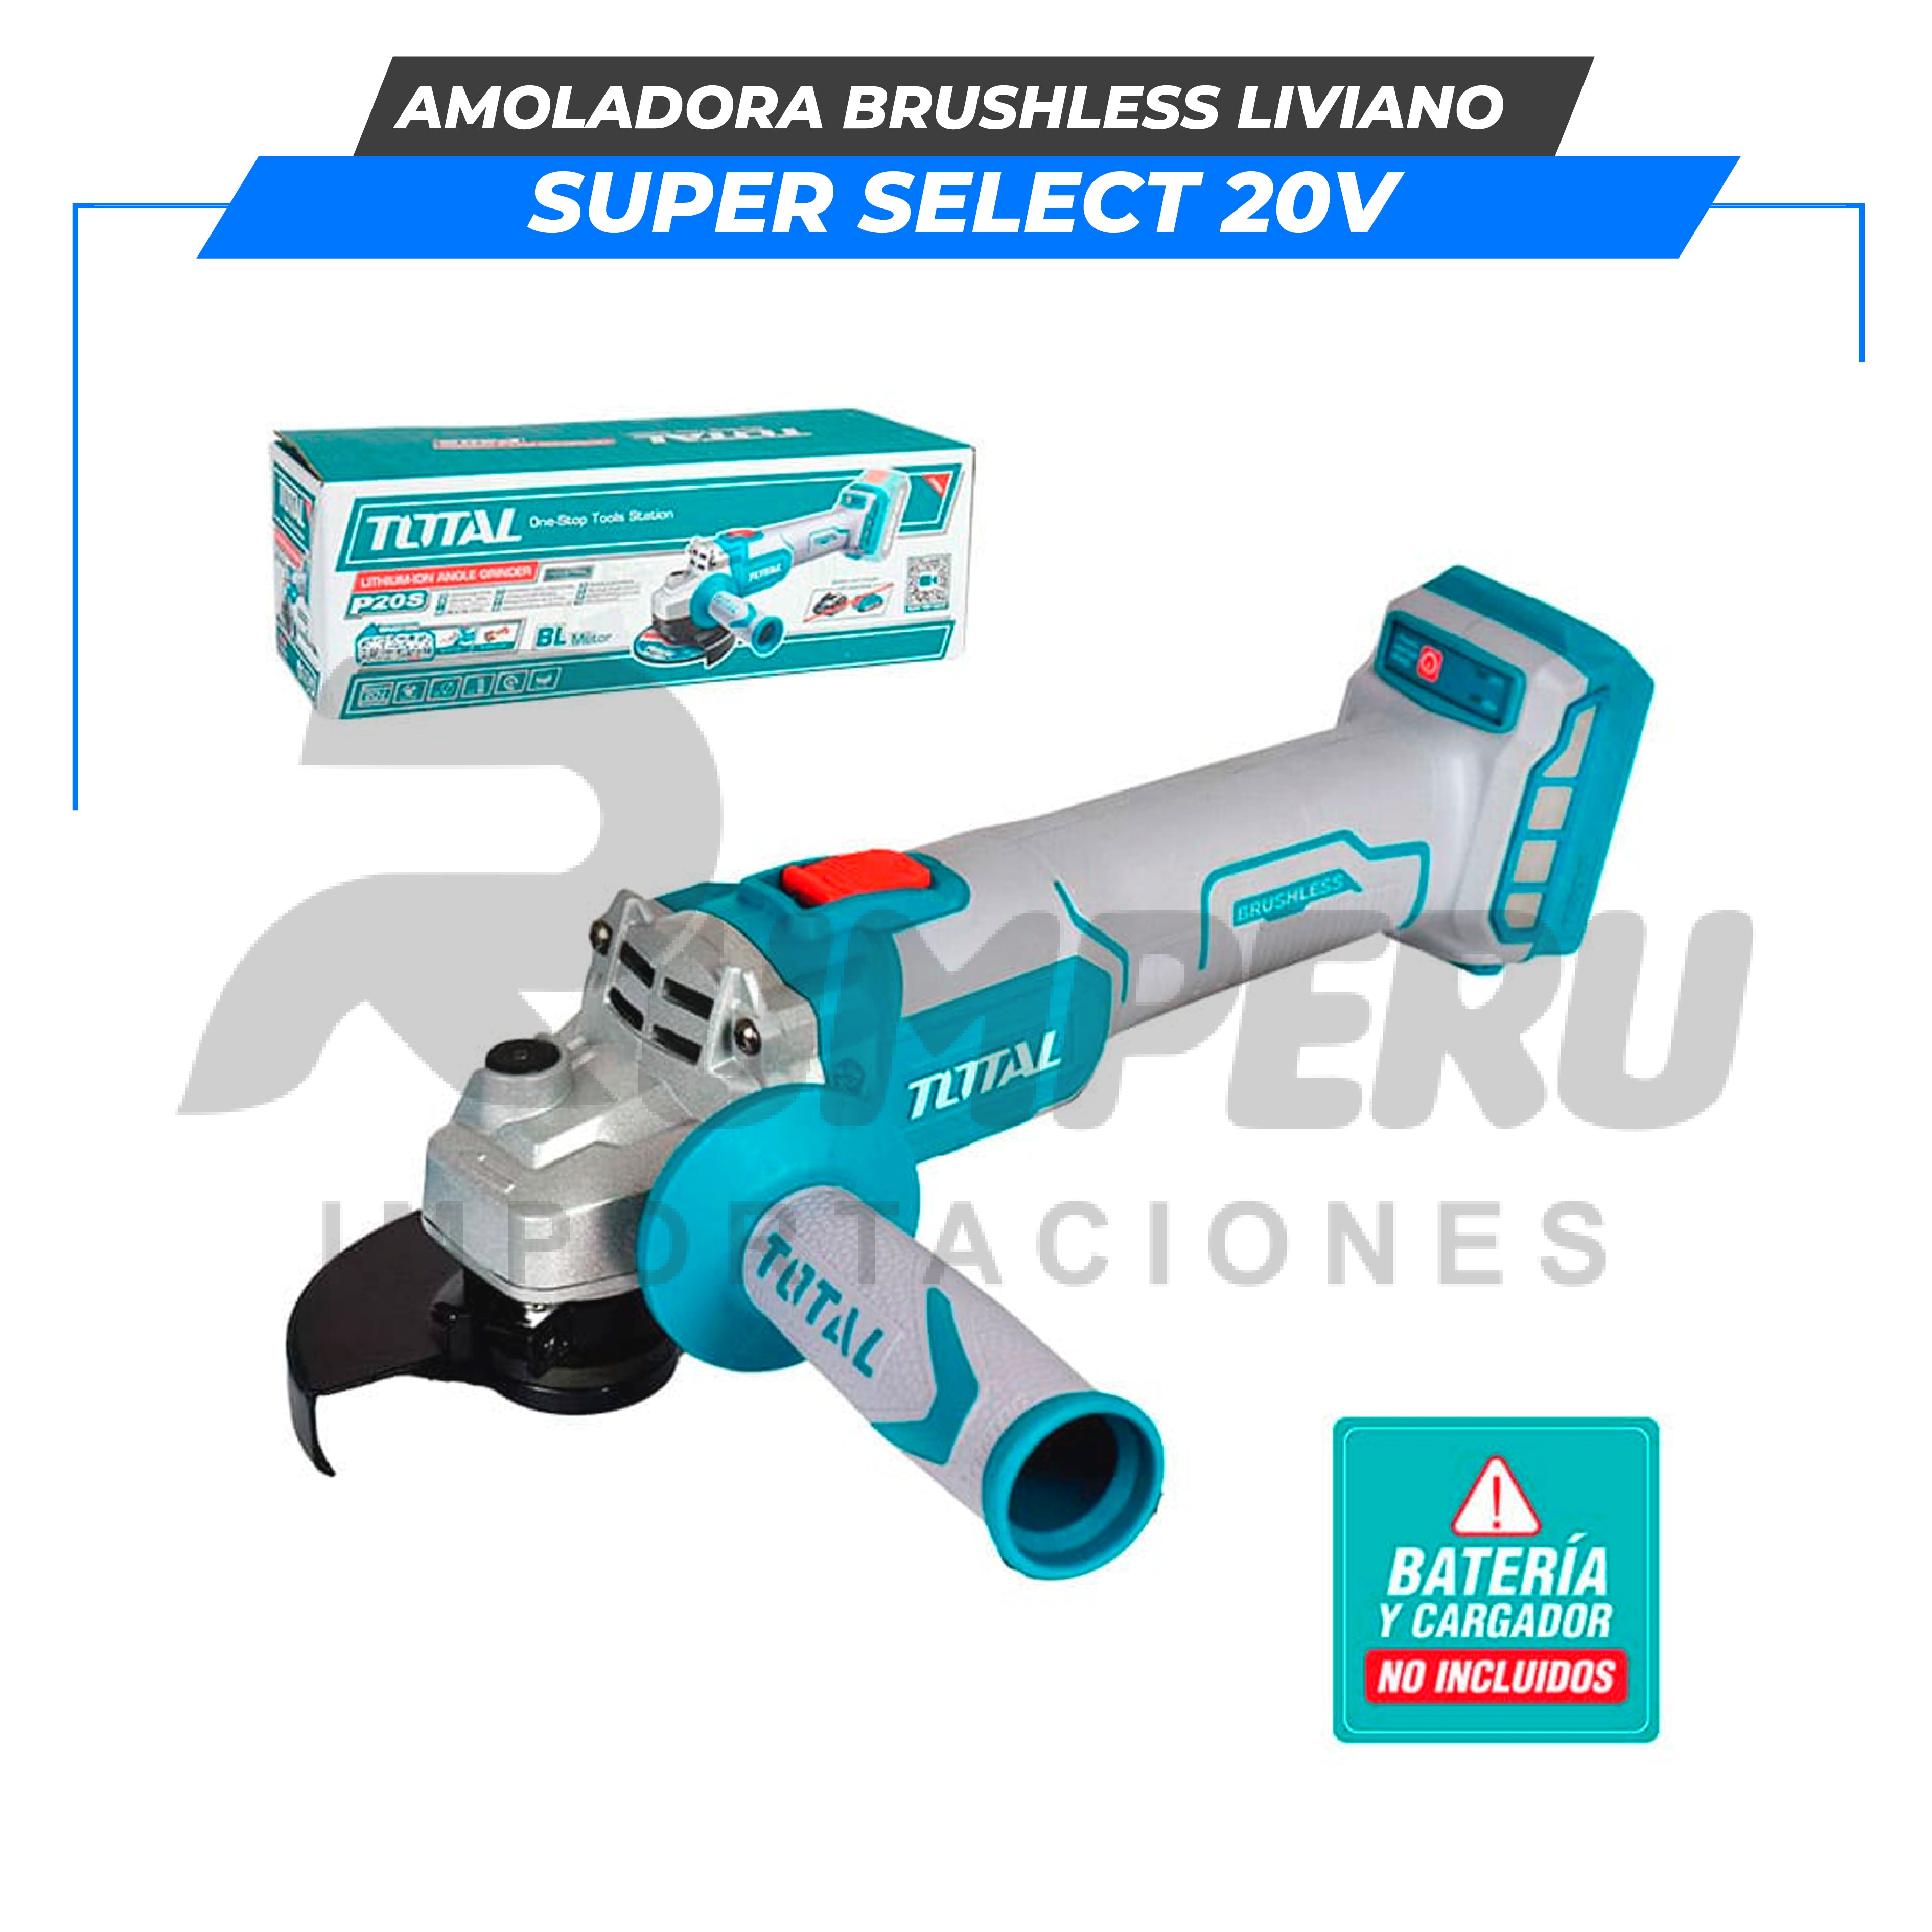 Amoladora 20v BRUSHLESS LIVIANO SUPER SELECT